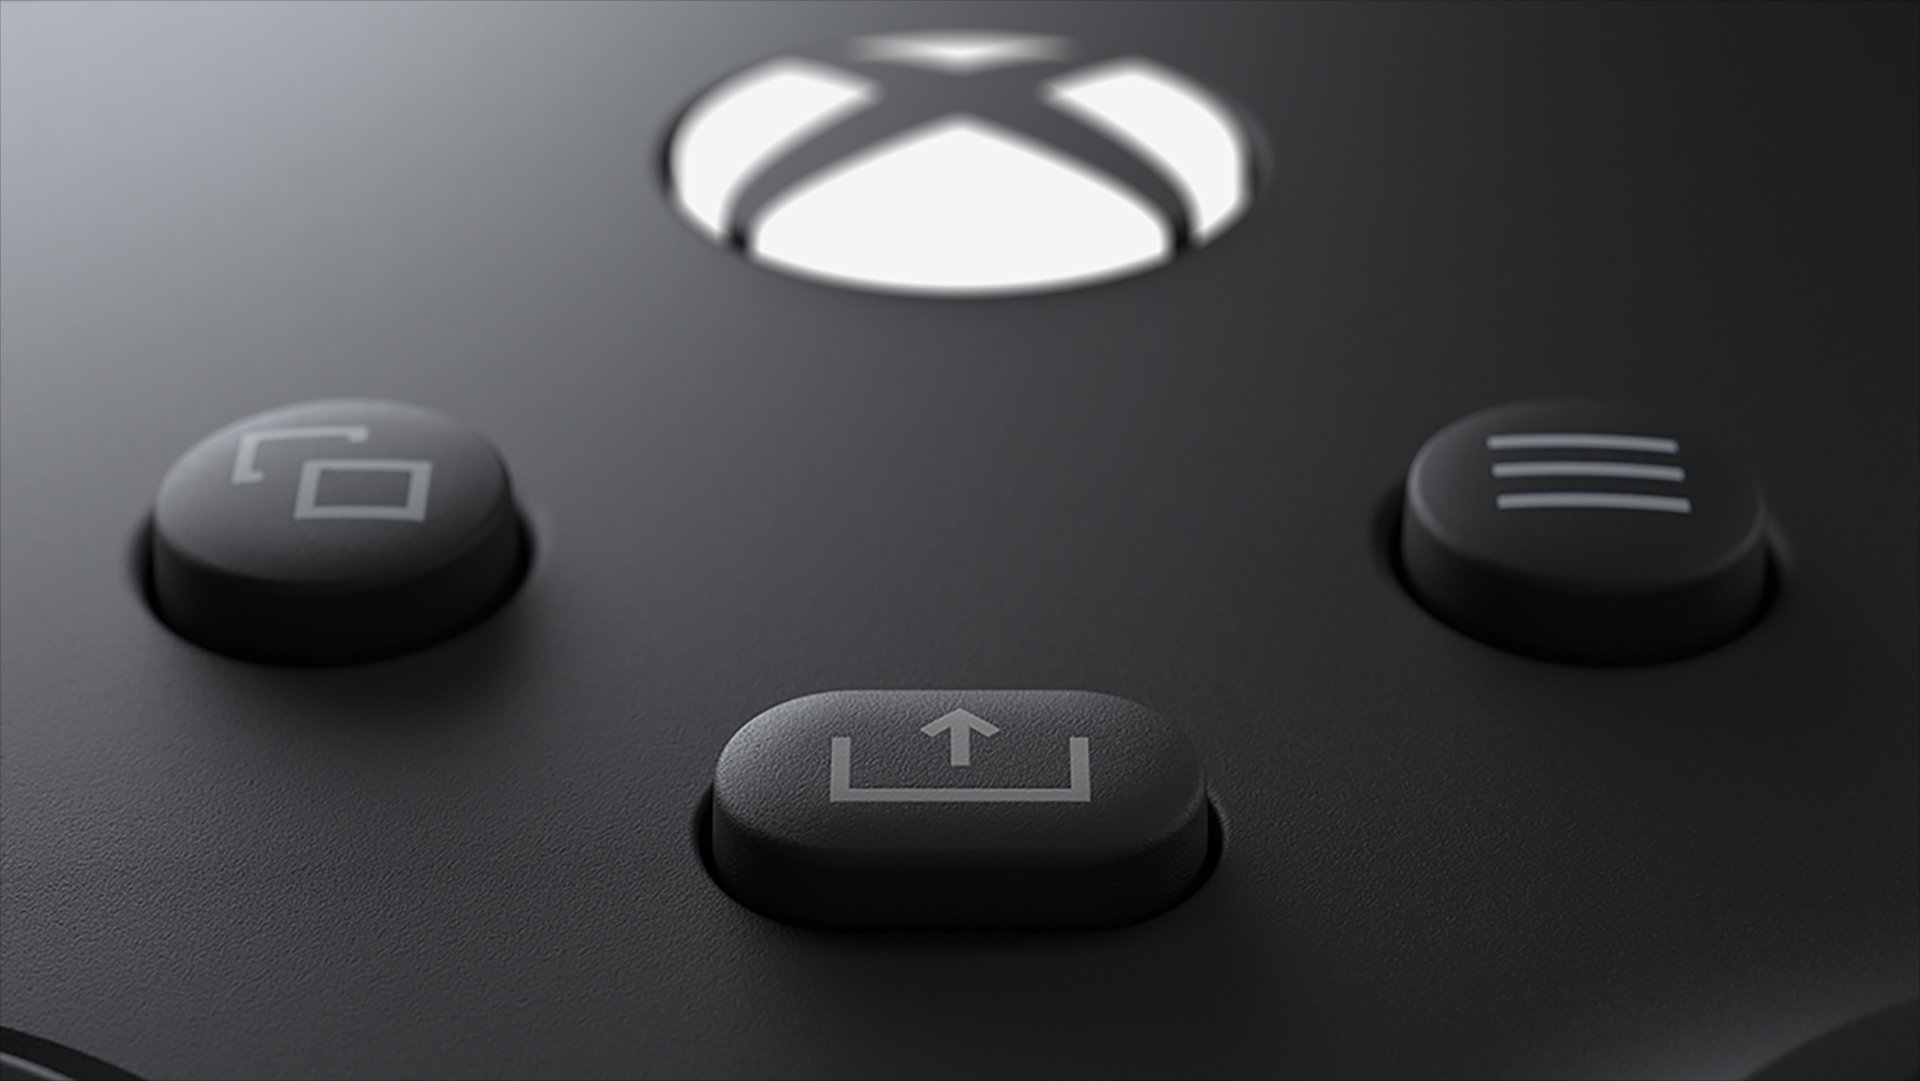 Xbox Wireless Controller Share button